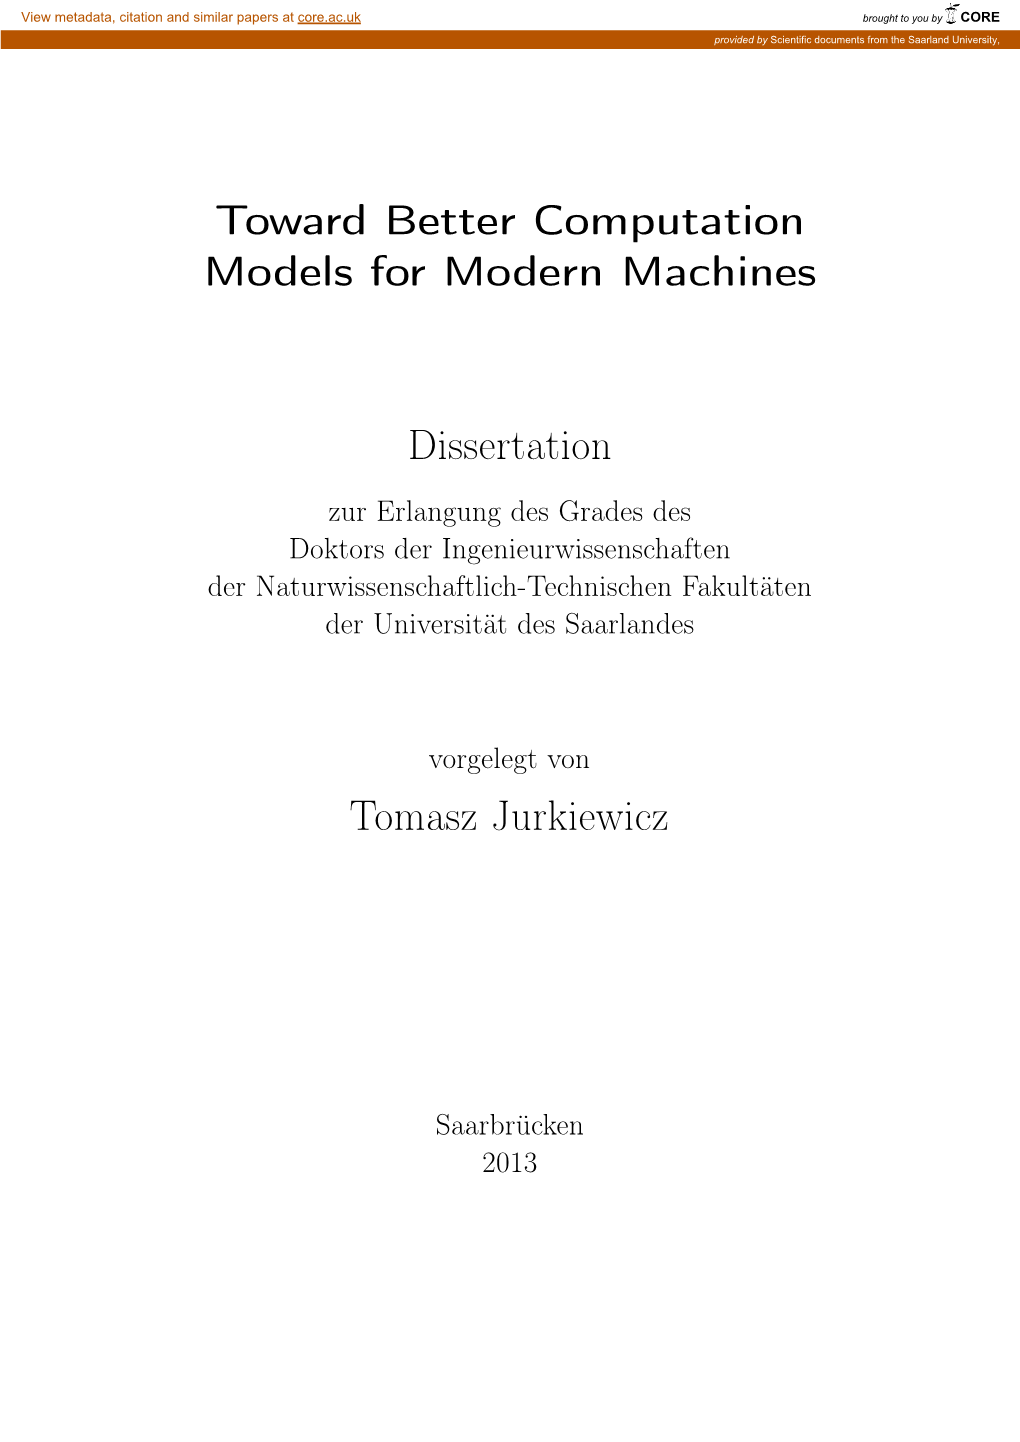 Toward Better Computation Models for Modern Machines